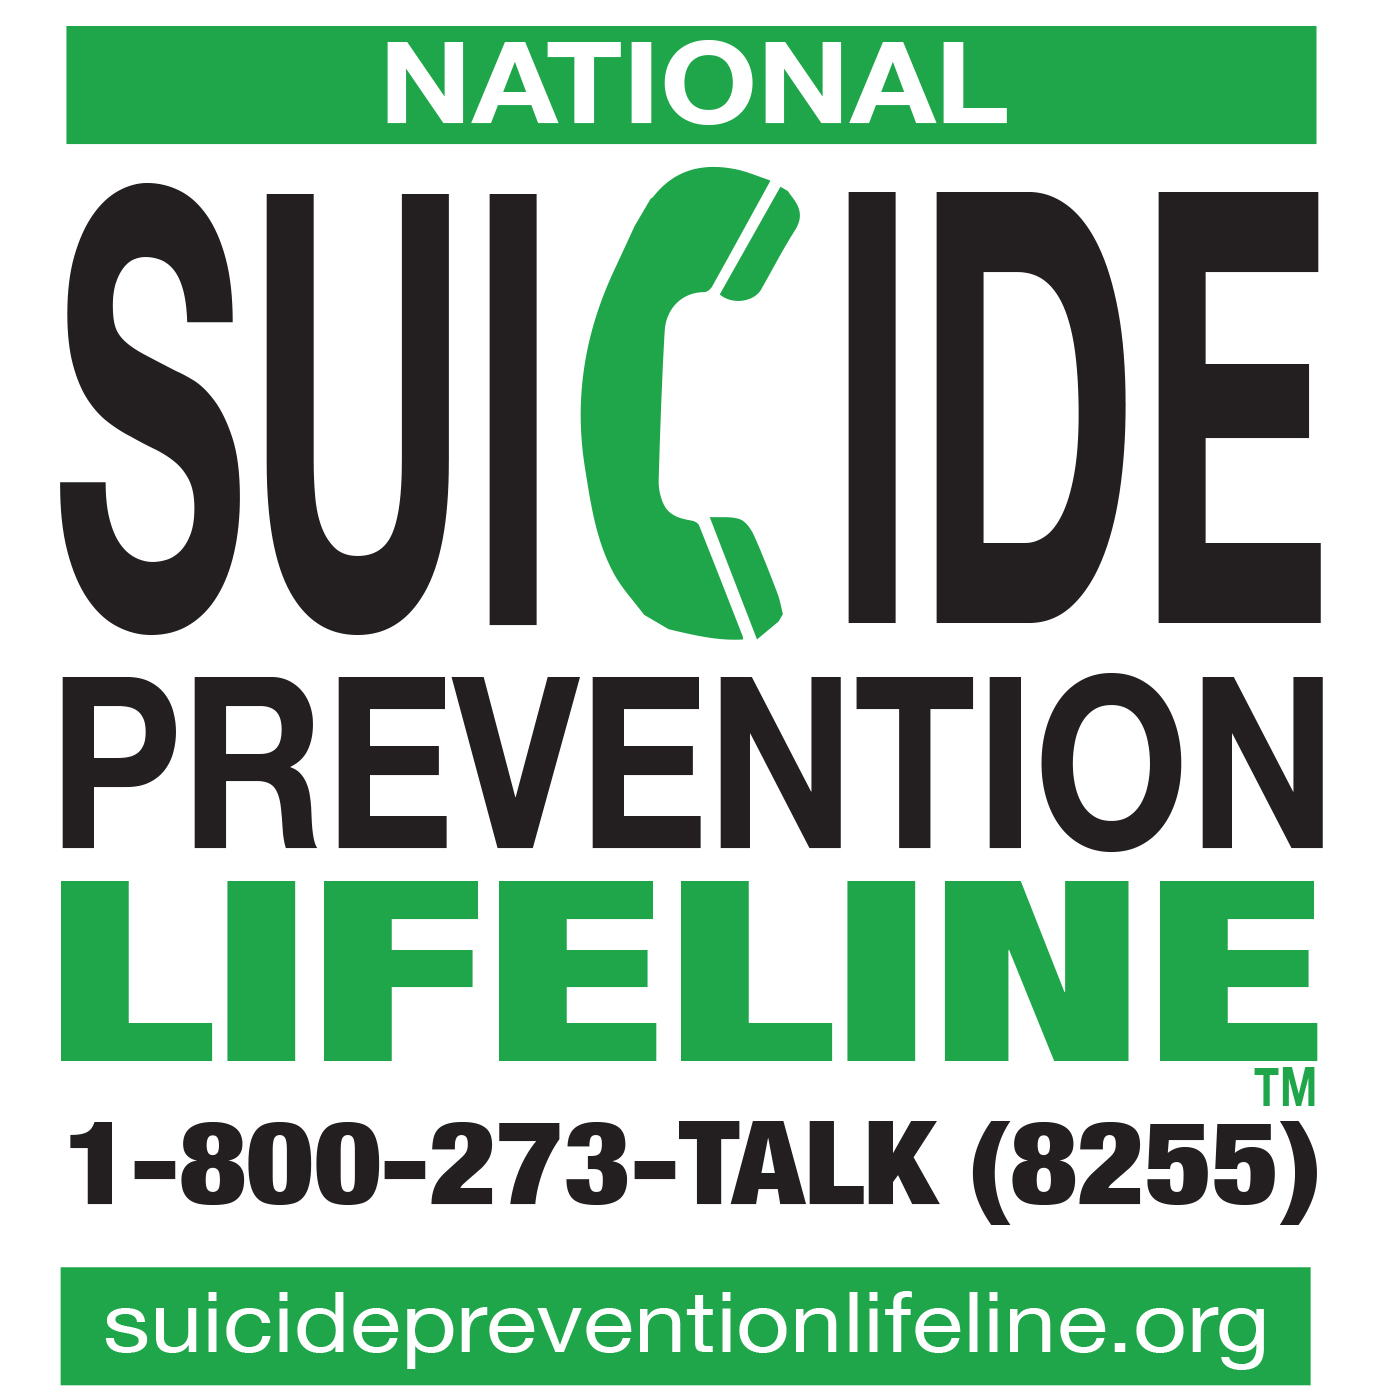 National suicide prevention lifeline 1-800-273-8255